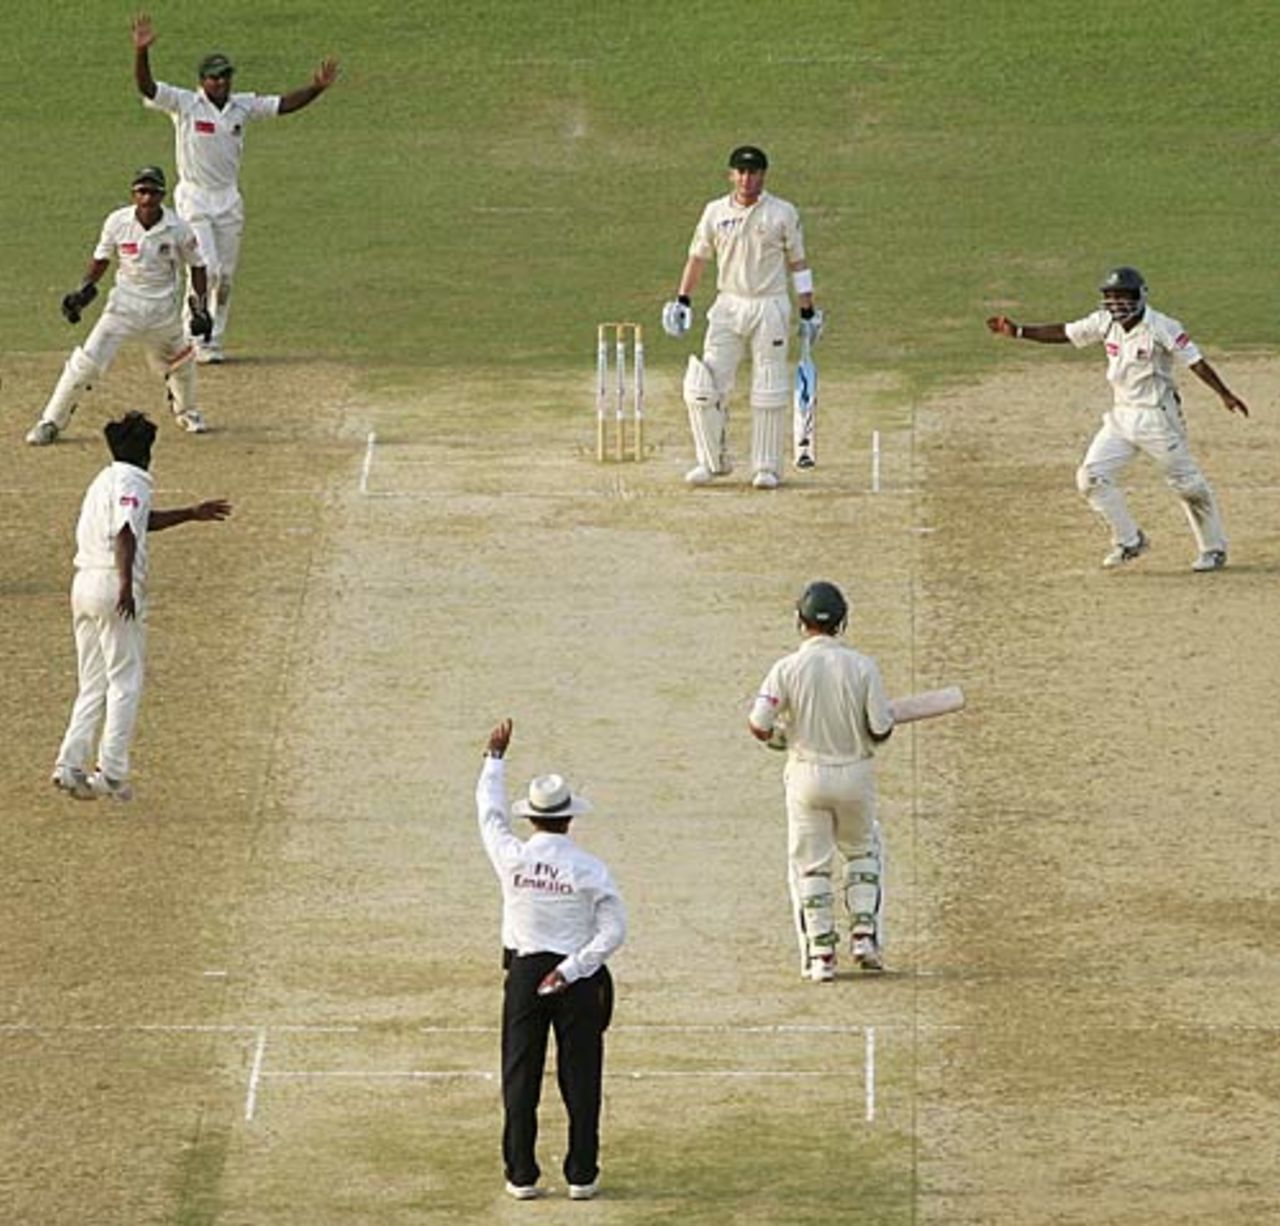 Michael Clarke is caught by Khaled Mashud off Mohammad Rafique, Bangladesh v Australia, 1st Test, Fatullah, 4th day, April 12, 2006